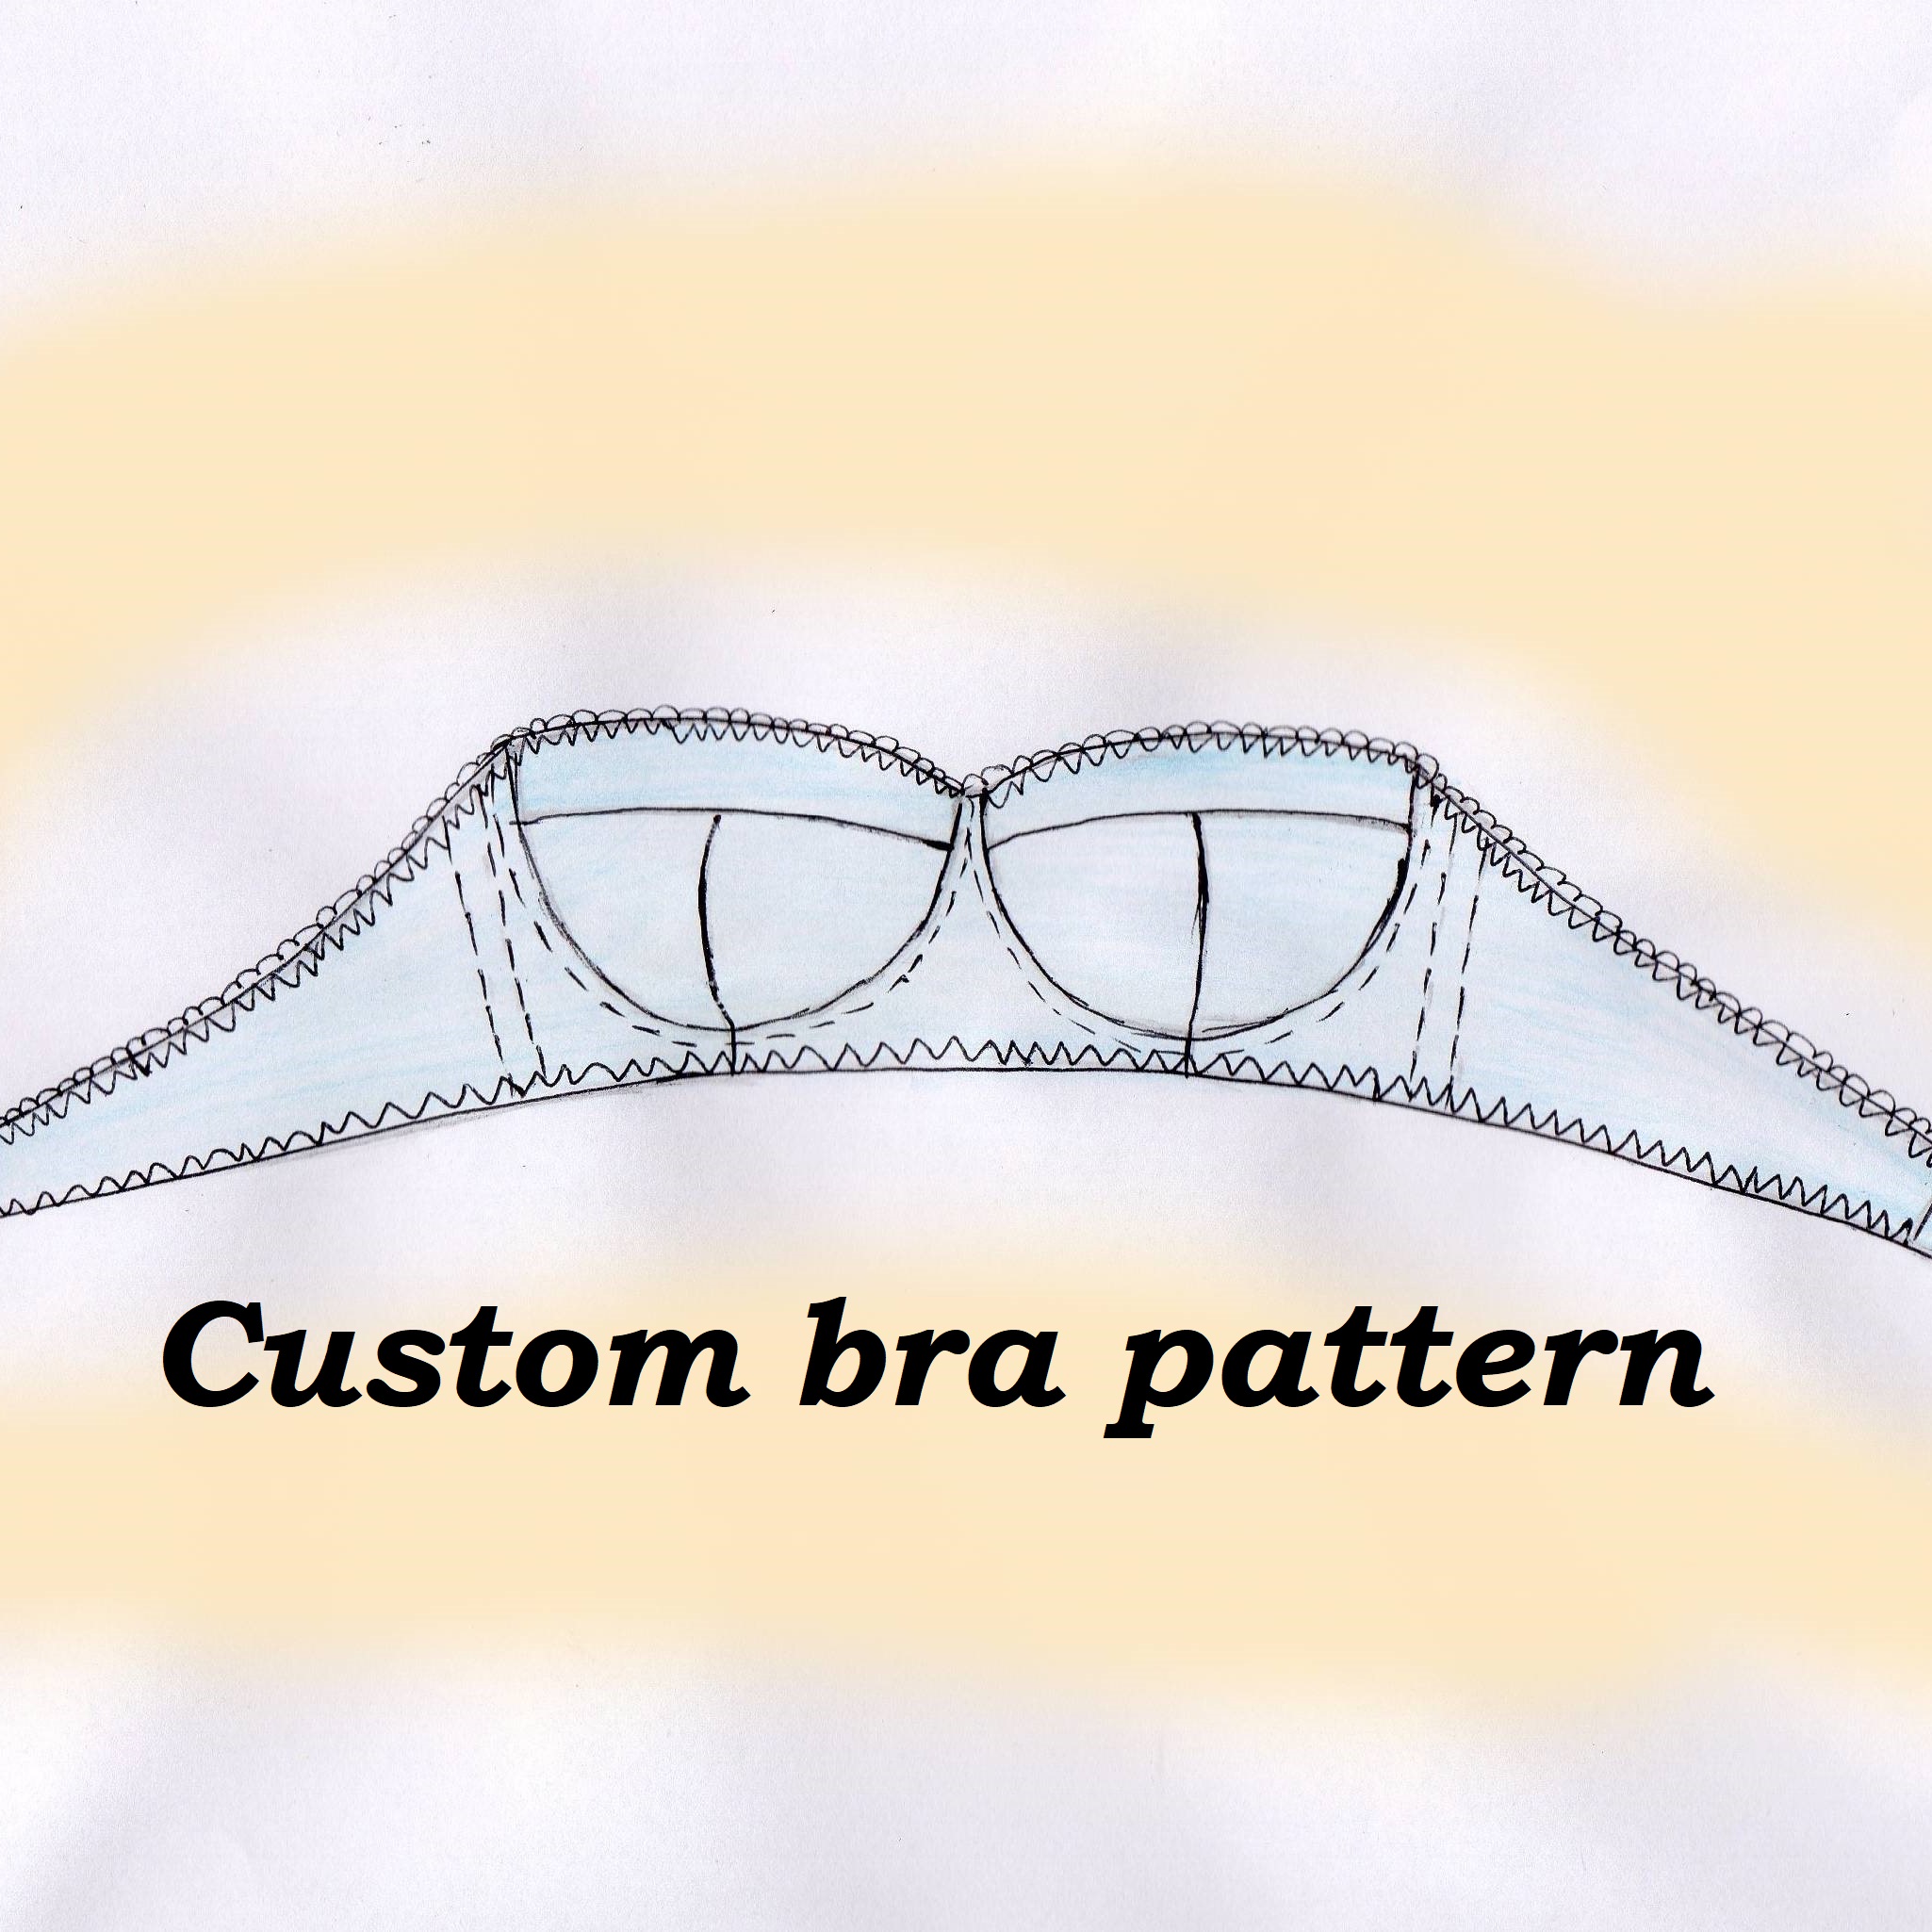 Strapless pattern, Strapless bra pattern, Custom bra pattern